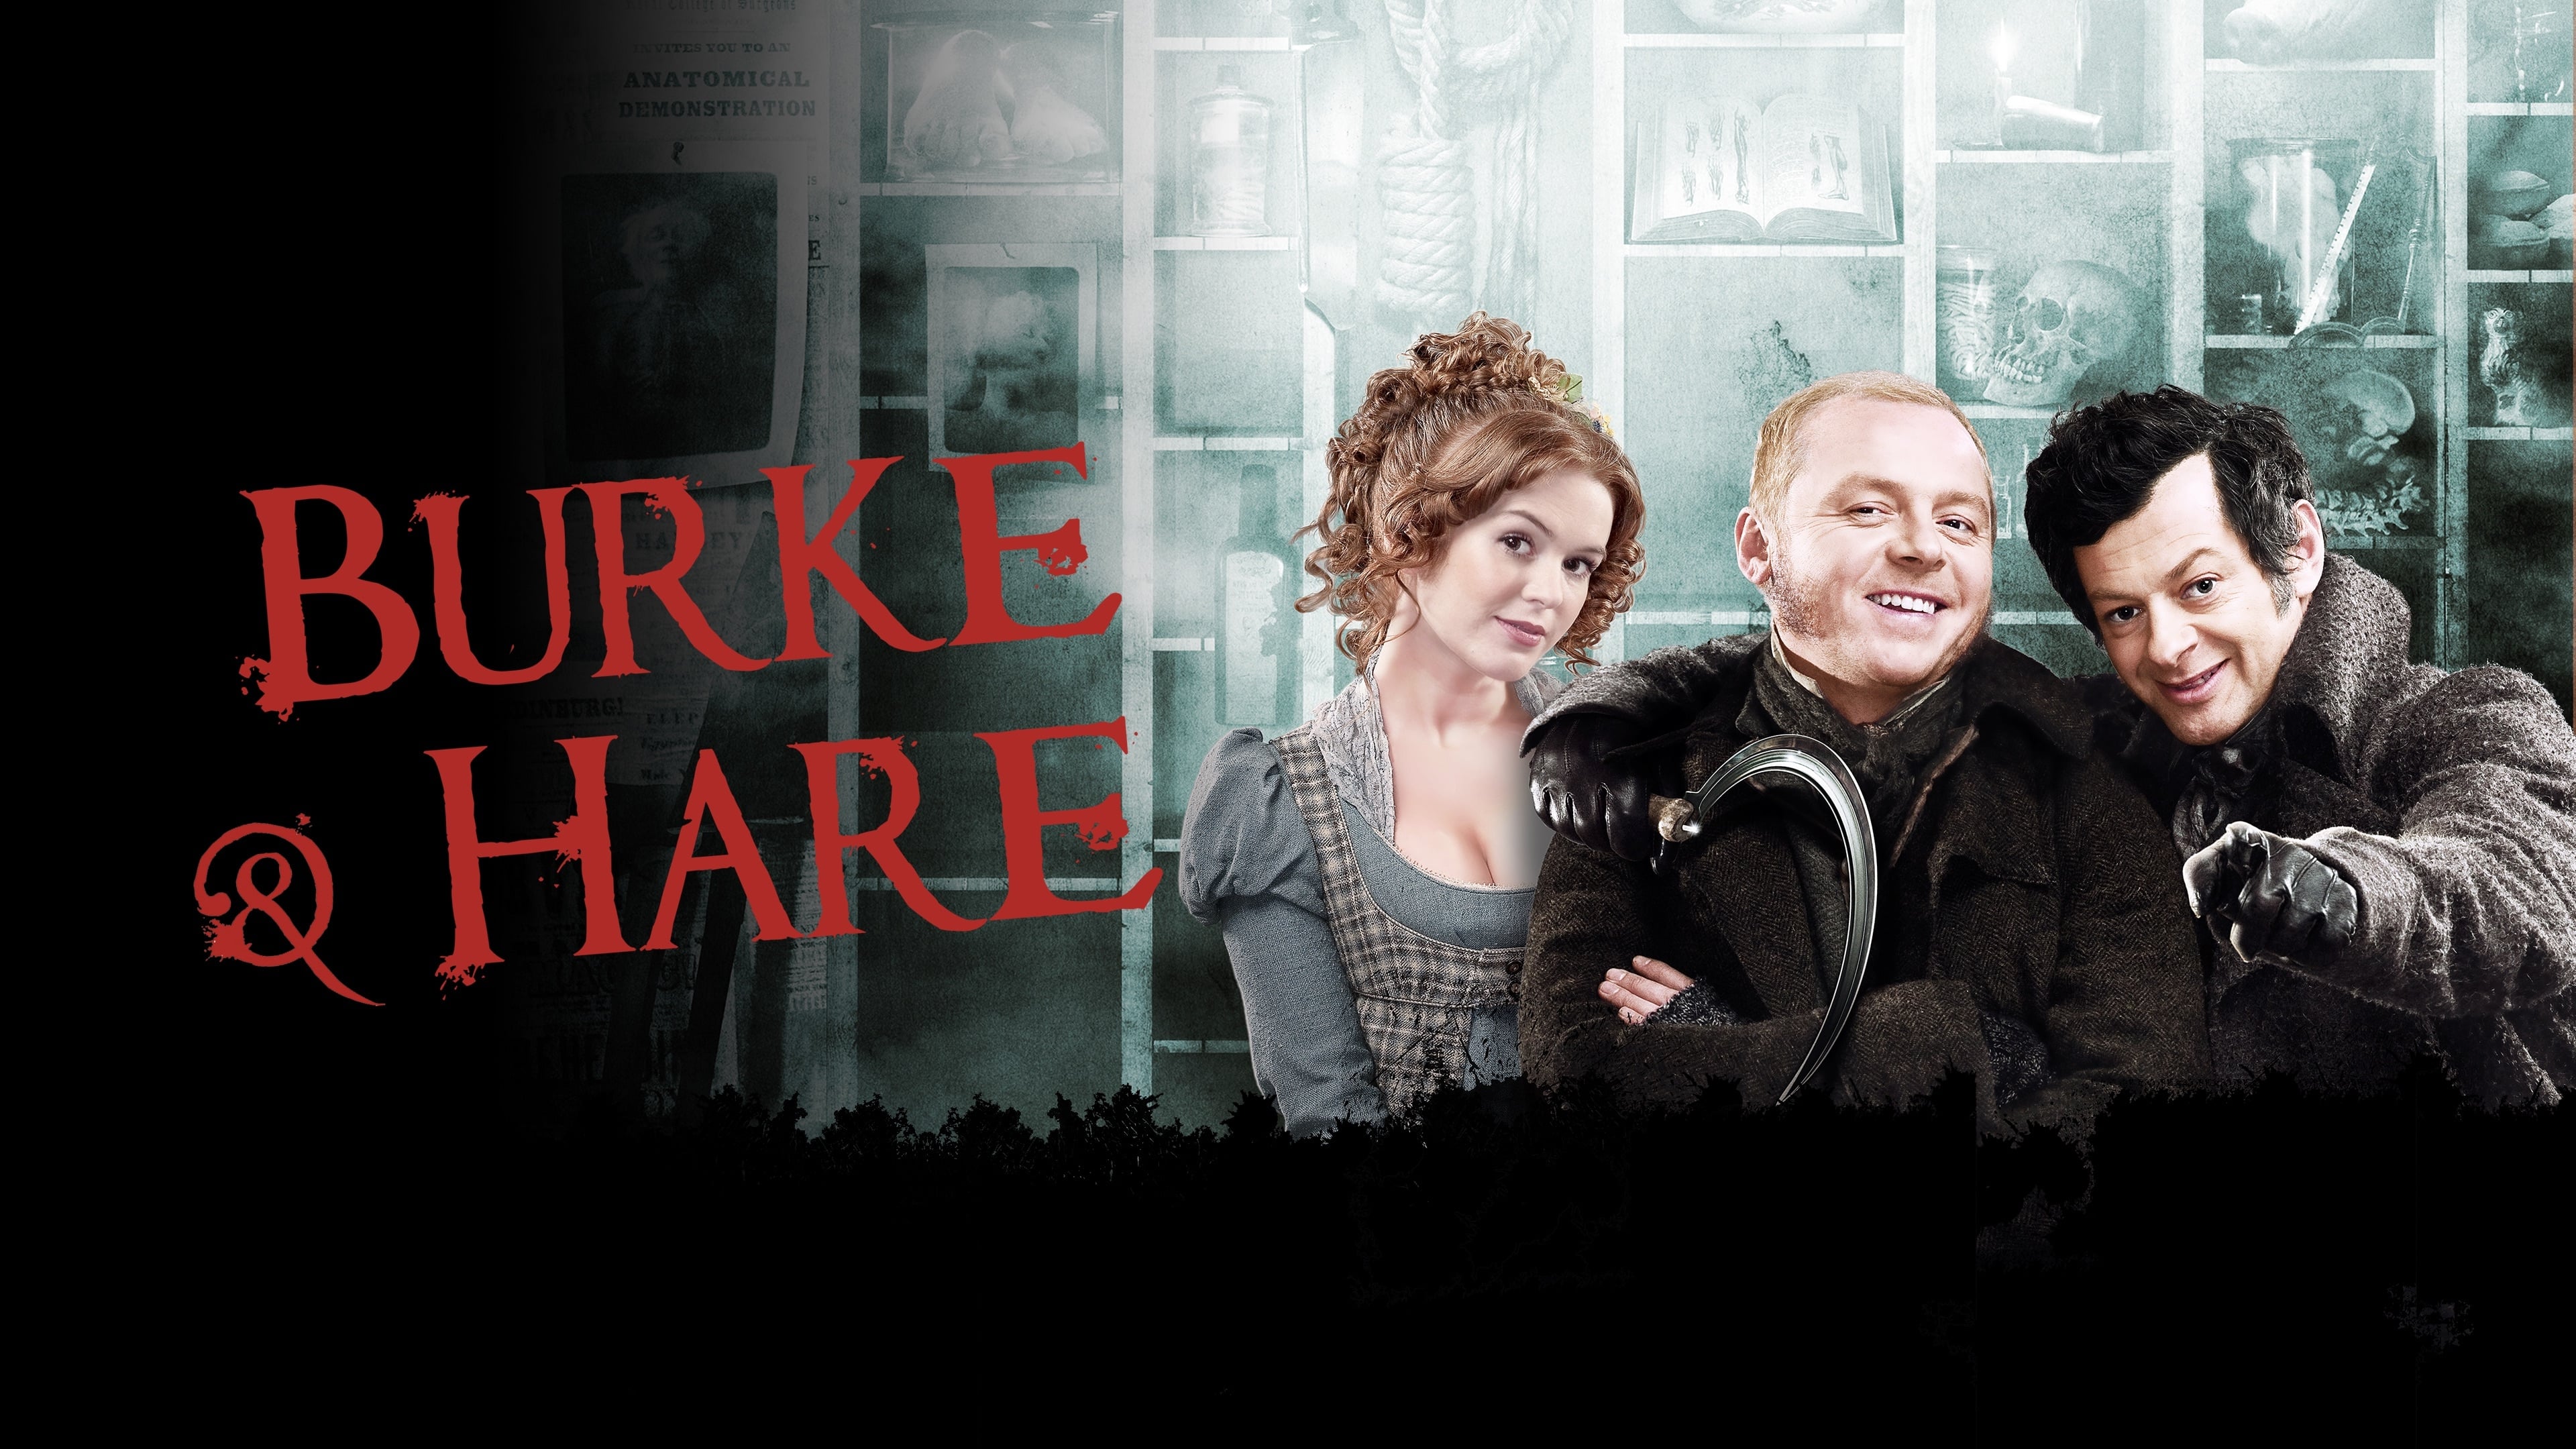 Burke & Hare (2010)